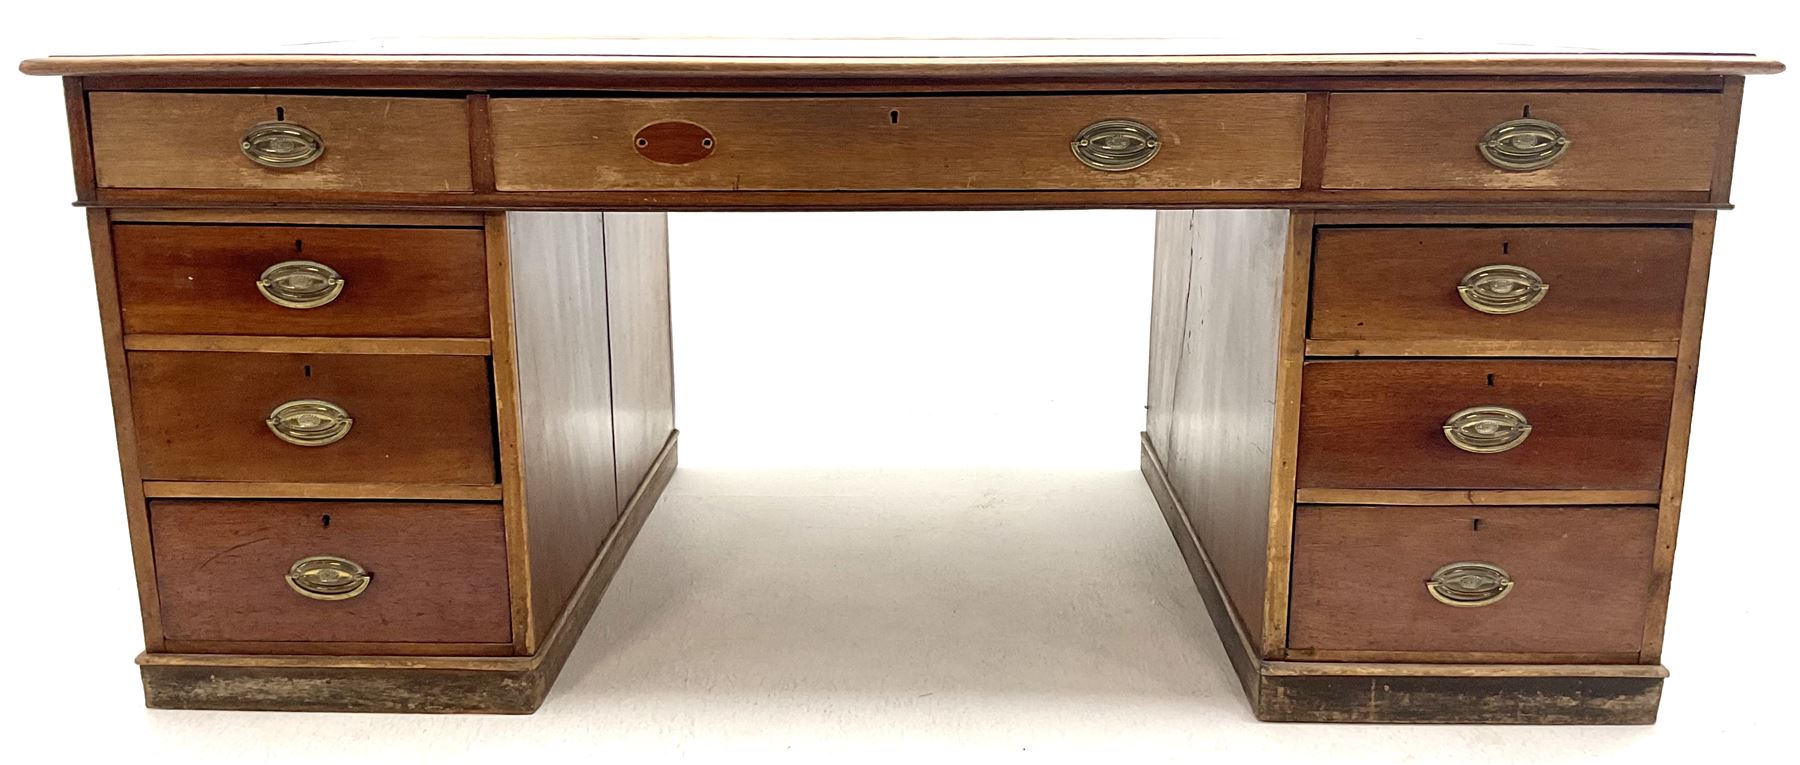 19th century mahogany twin pedestal partners desk